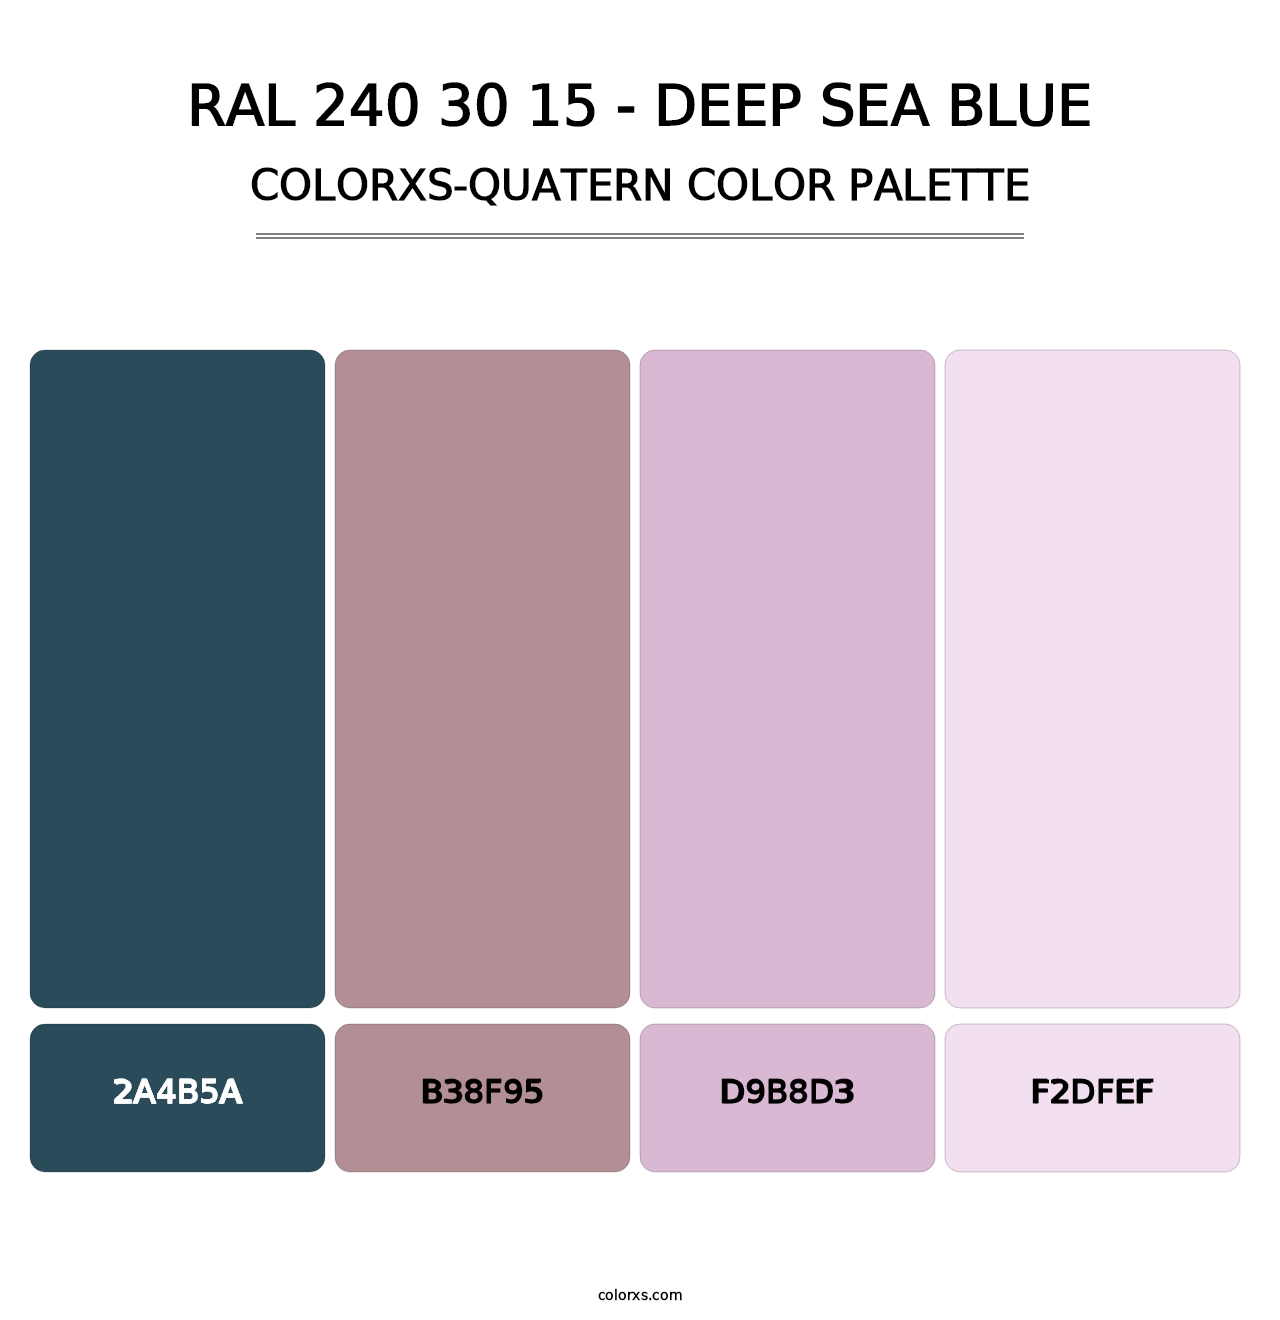 RAL 240 30 15 - Deep Sea Blue - Colorxs Quatern Palette